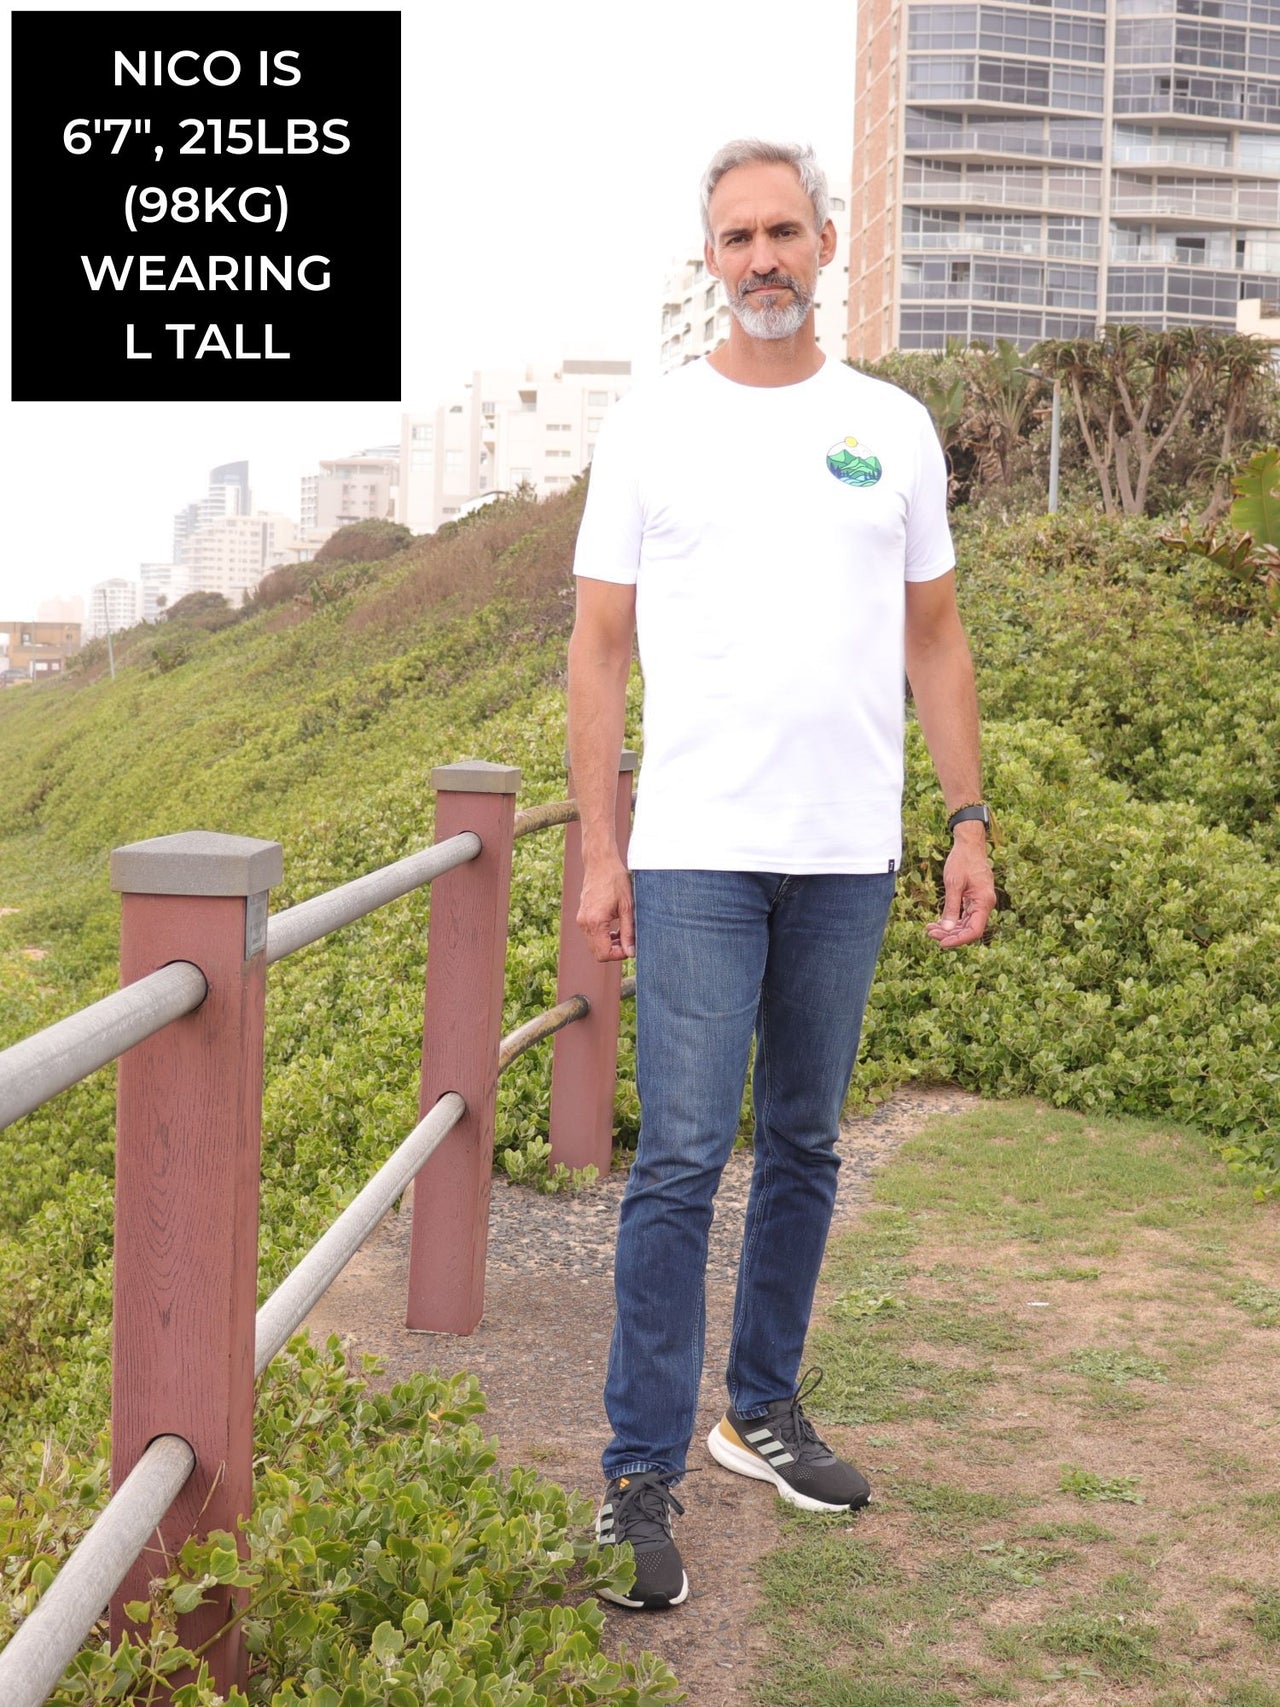 A head to toe shot of a tall slim guy in an L tall graphic t-shirt with a landscape design.